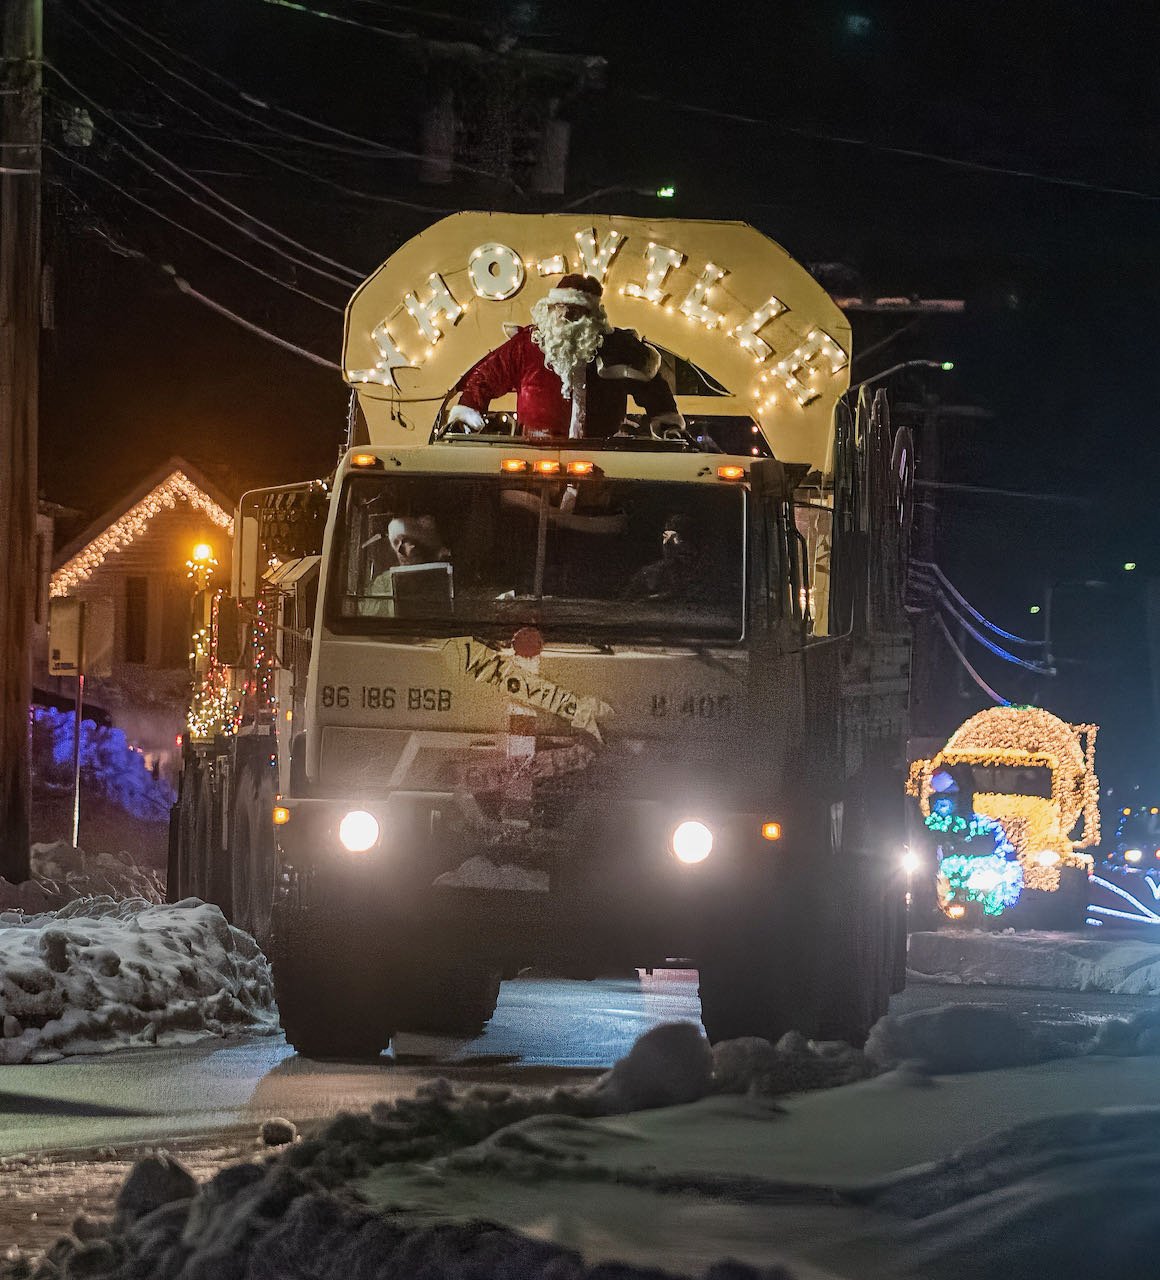   Santa's truck has a Who-Ville theme.&nbsp;Photo by Gordon Miller  